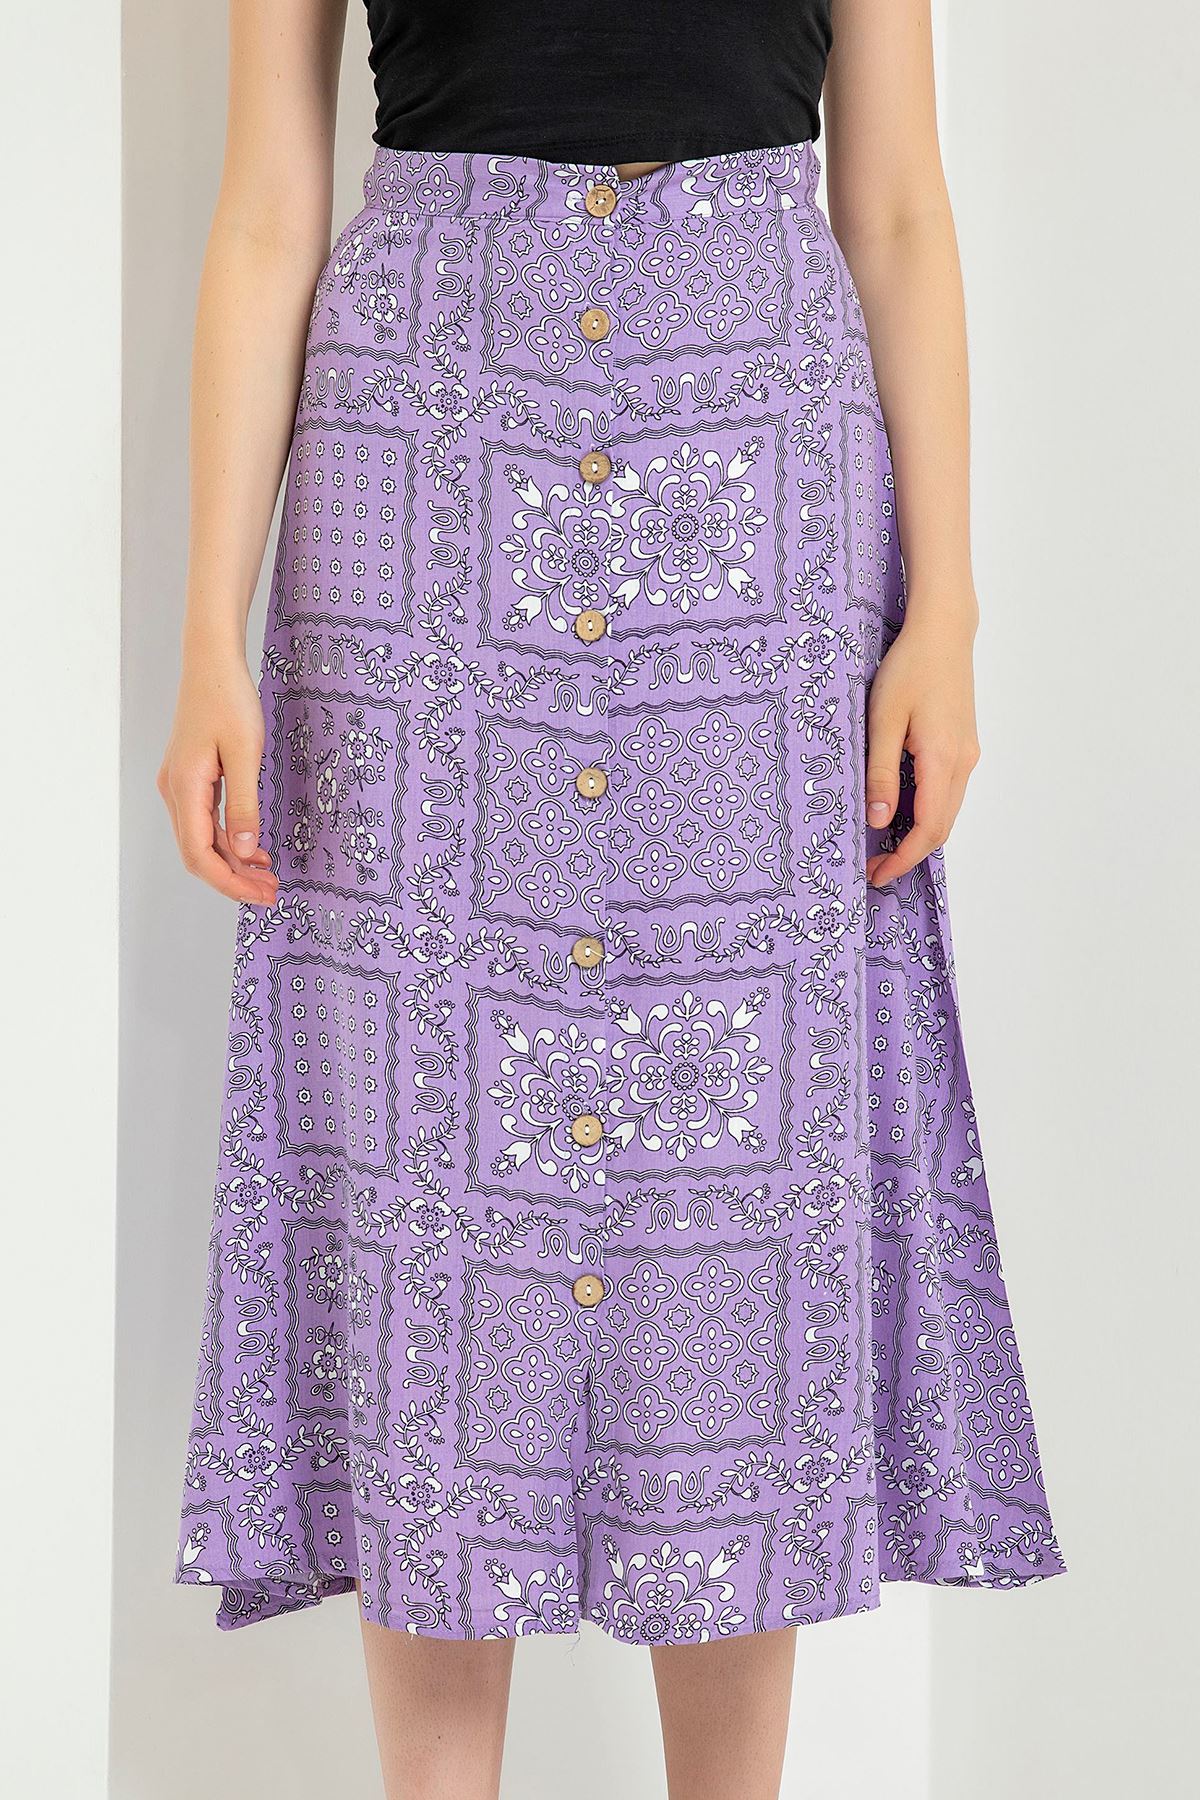 Jesica Fabric Full Fit Ethnic Print Women'S Skirt - Lilac